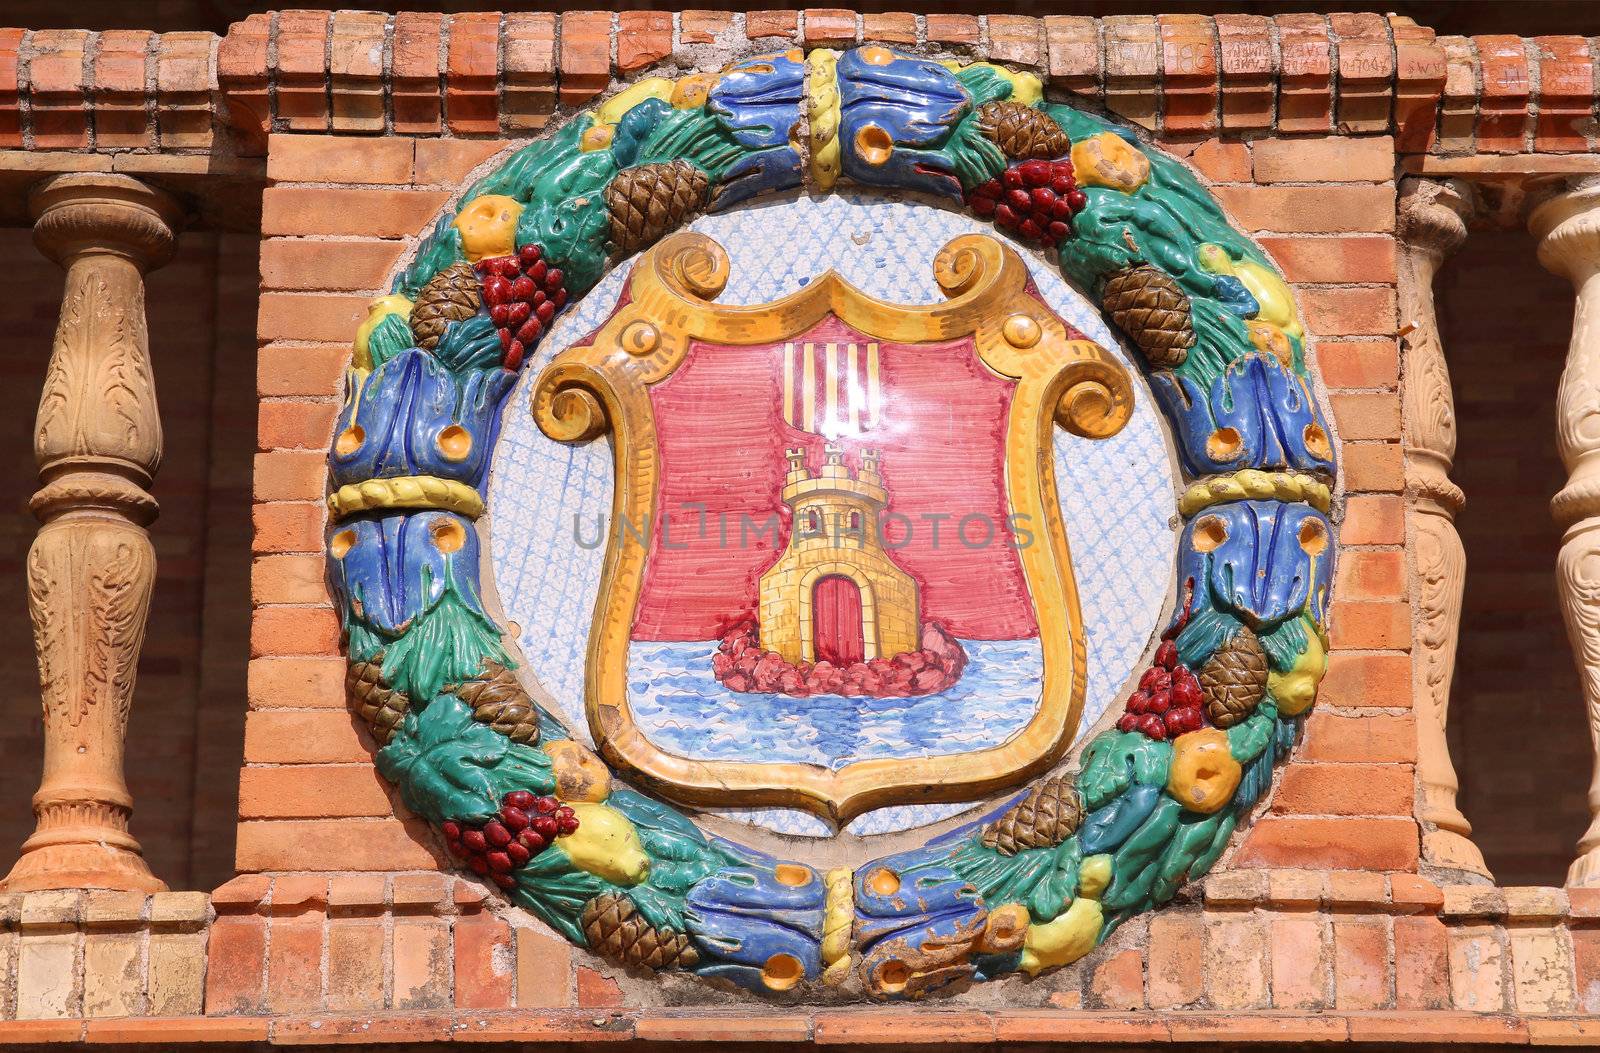 Famous ceramic decoration in Plaza de Espana, Sevilla, Spain. Alicante theme with coat of arms.